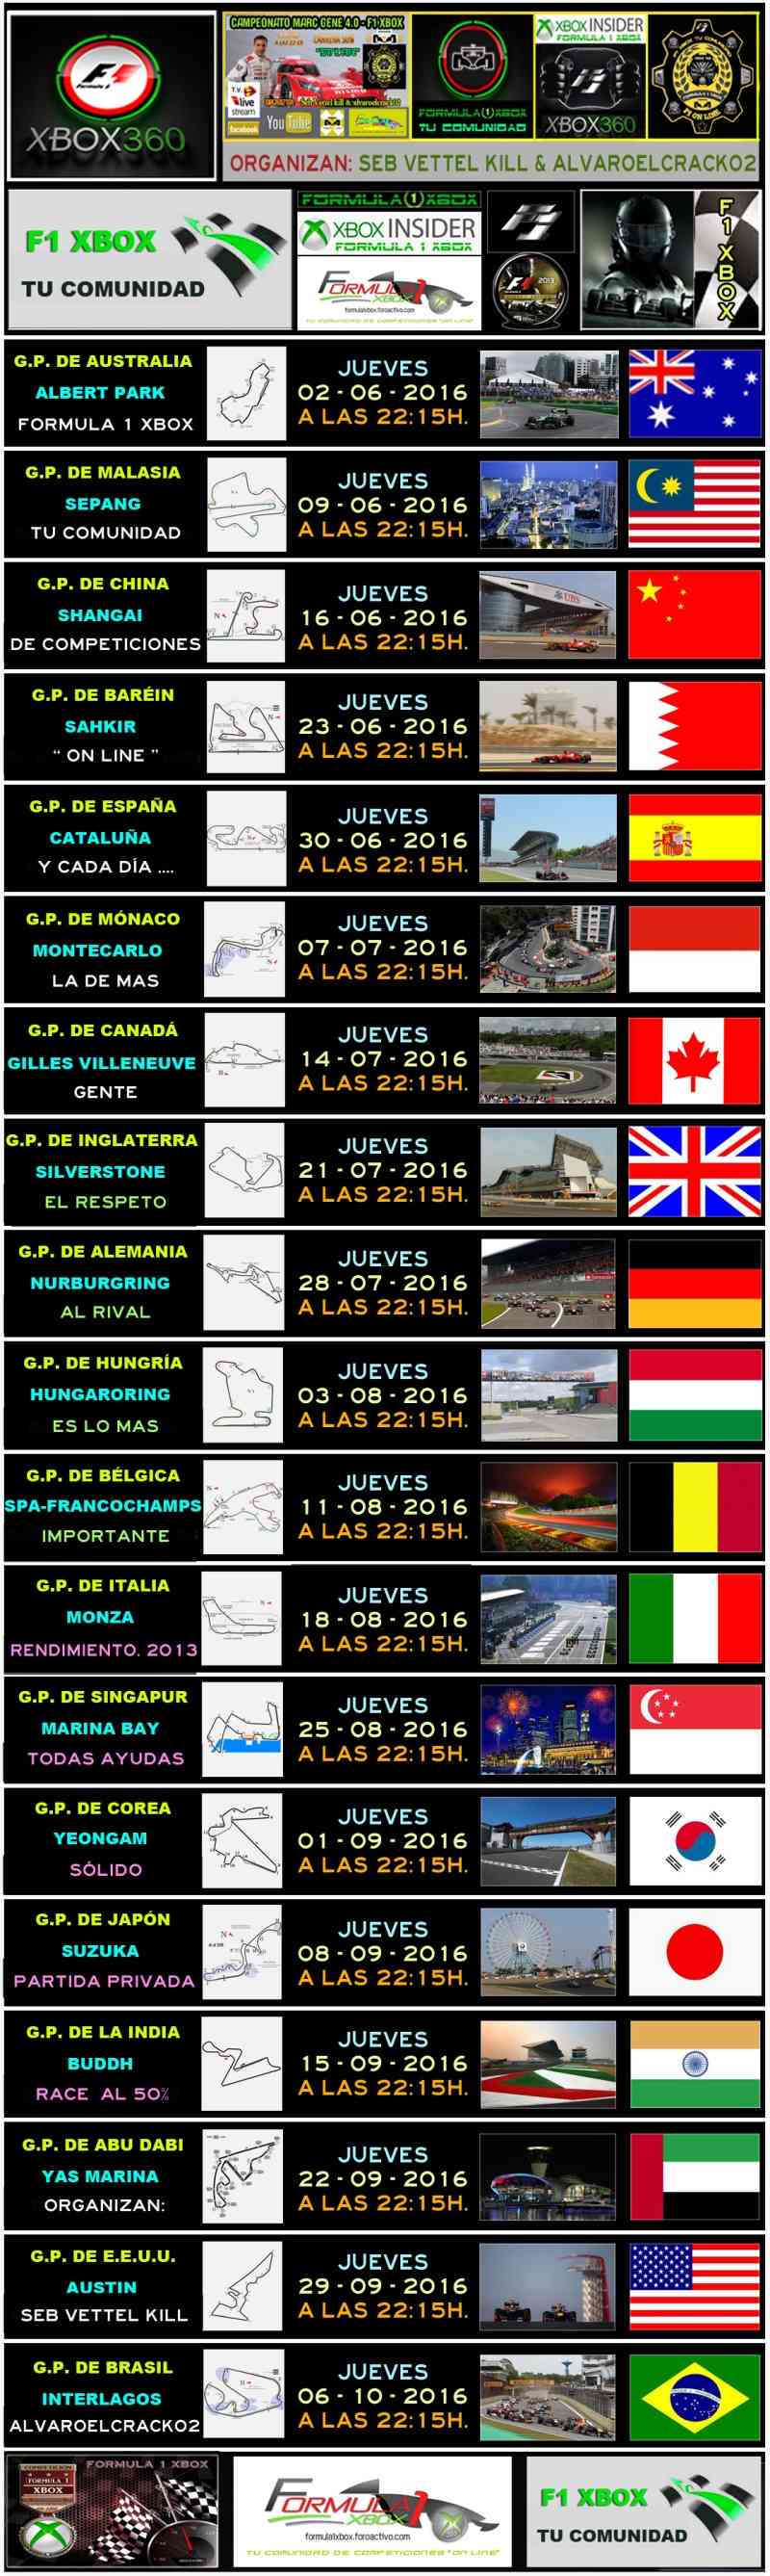 F1 2013 - XBOX 360 / CTO. MARC GENÉ 4.0 - F1 XBOX / INSCRIPCIONES Calend25